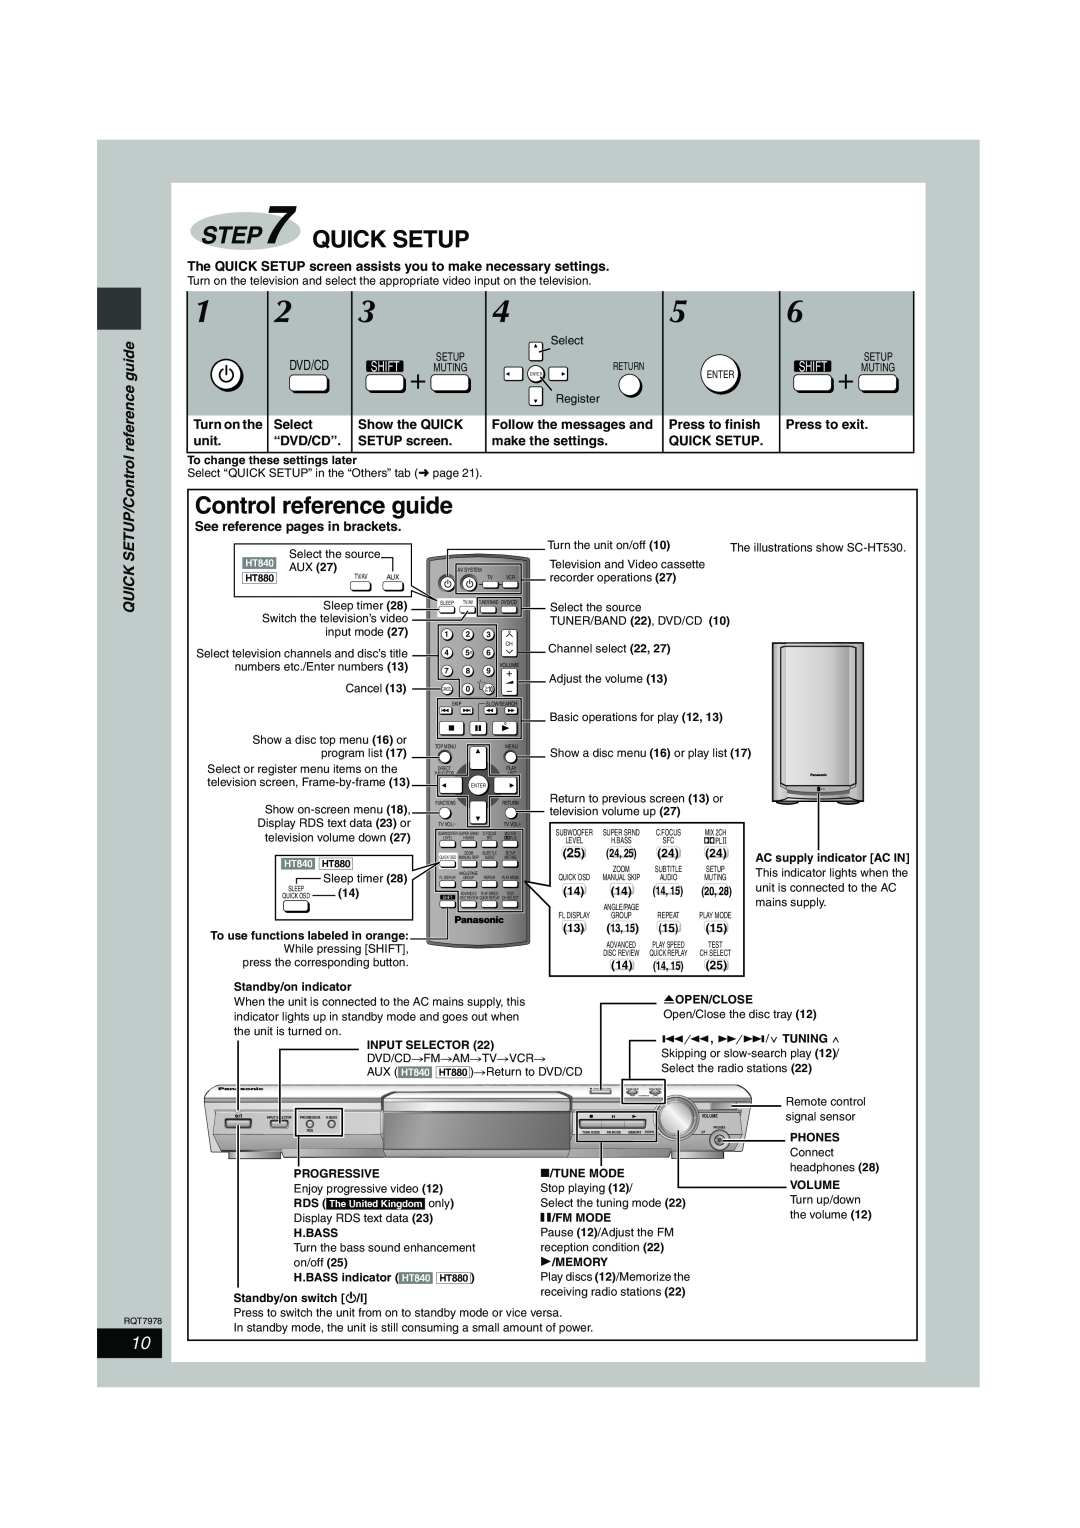 Panasonic SC-HT840 Quick Setup, Control reference guide, Dvd/Cd, QUICK SETUP/Control, Shift Muting, Turn on the, unit 